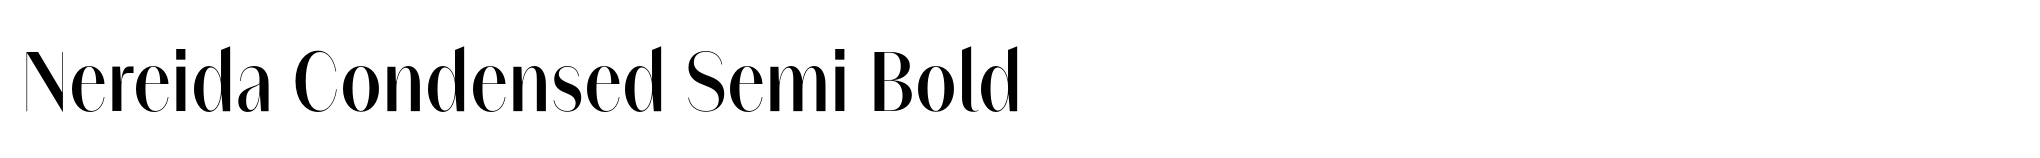 Nereida Condensed Semi Bold image